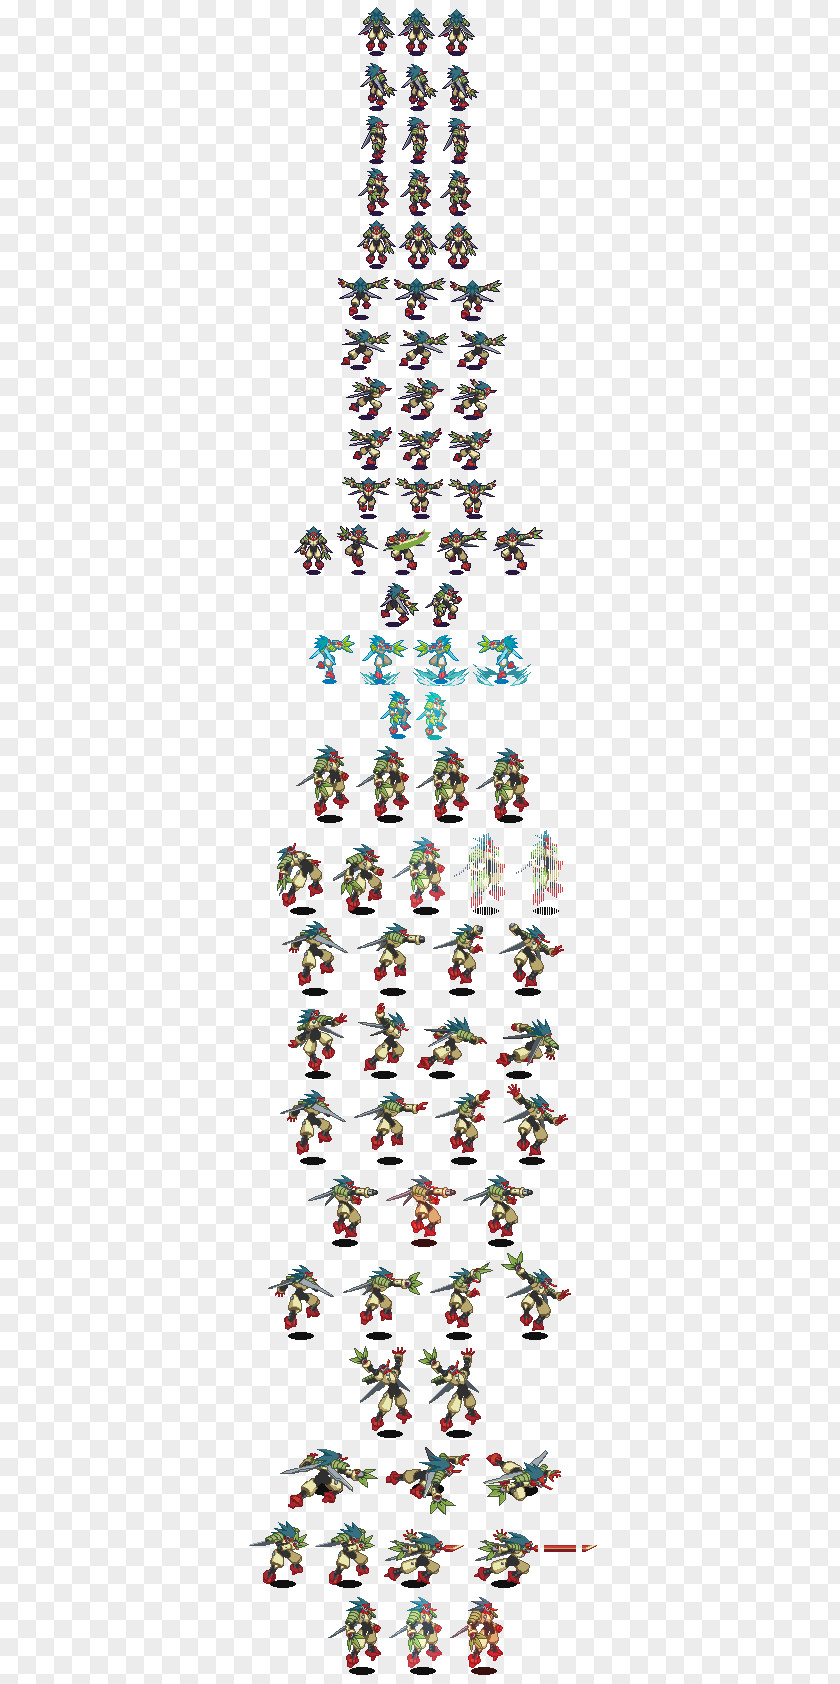 Megaman Sprite Mega Man Battle Network 6 Christmas Tree X PNG